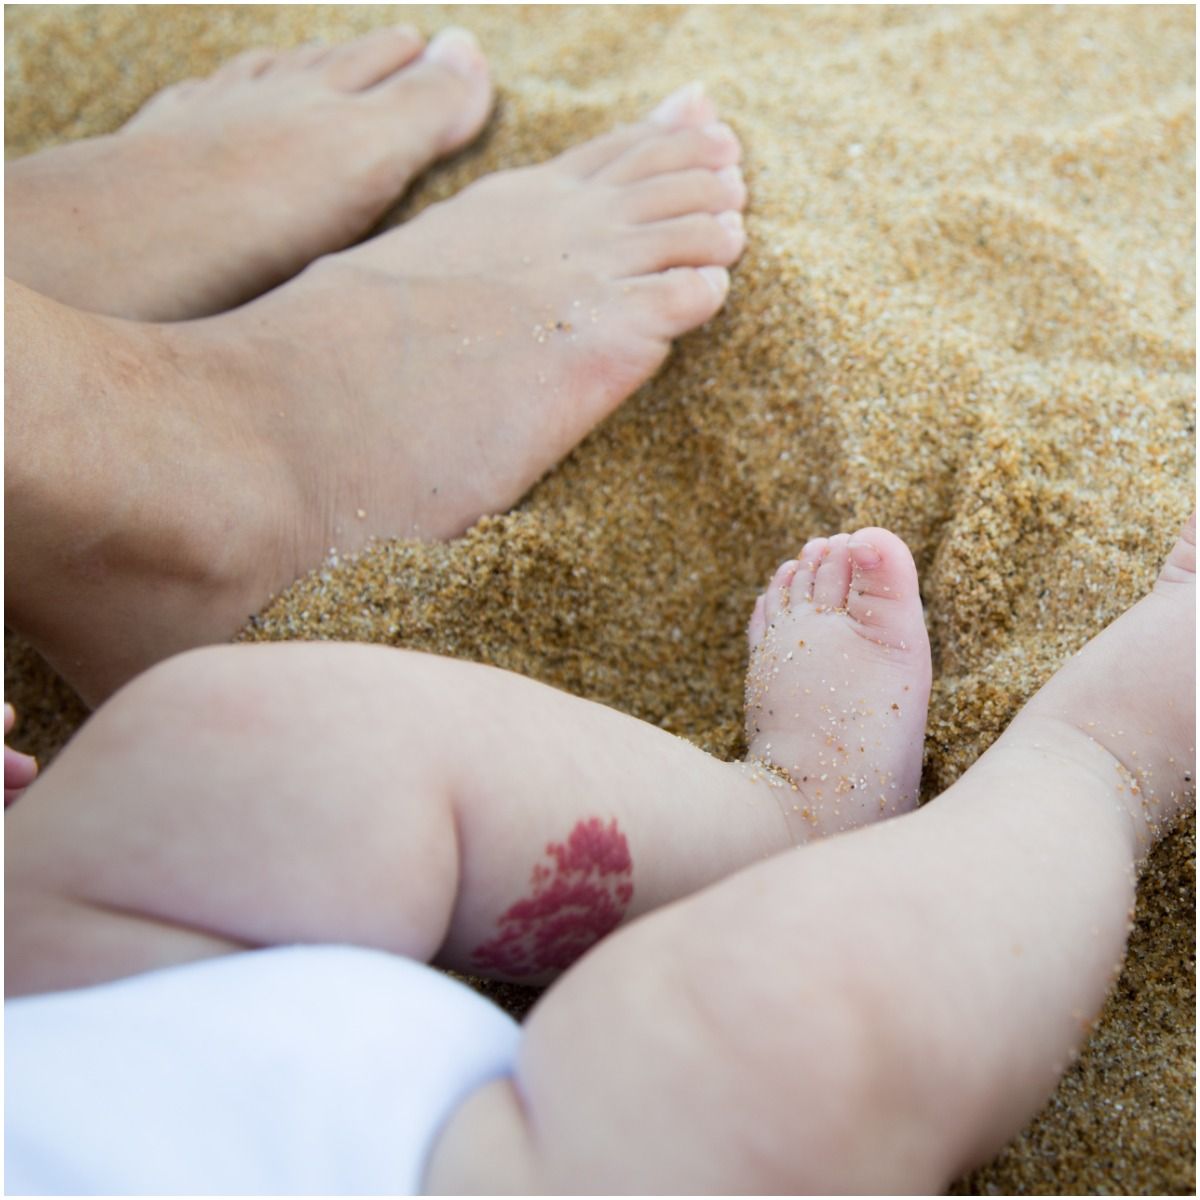 birthmark on baby foot